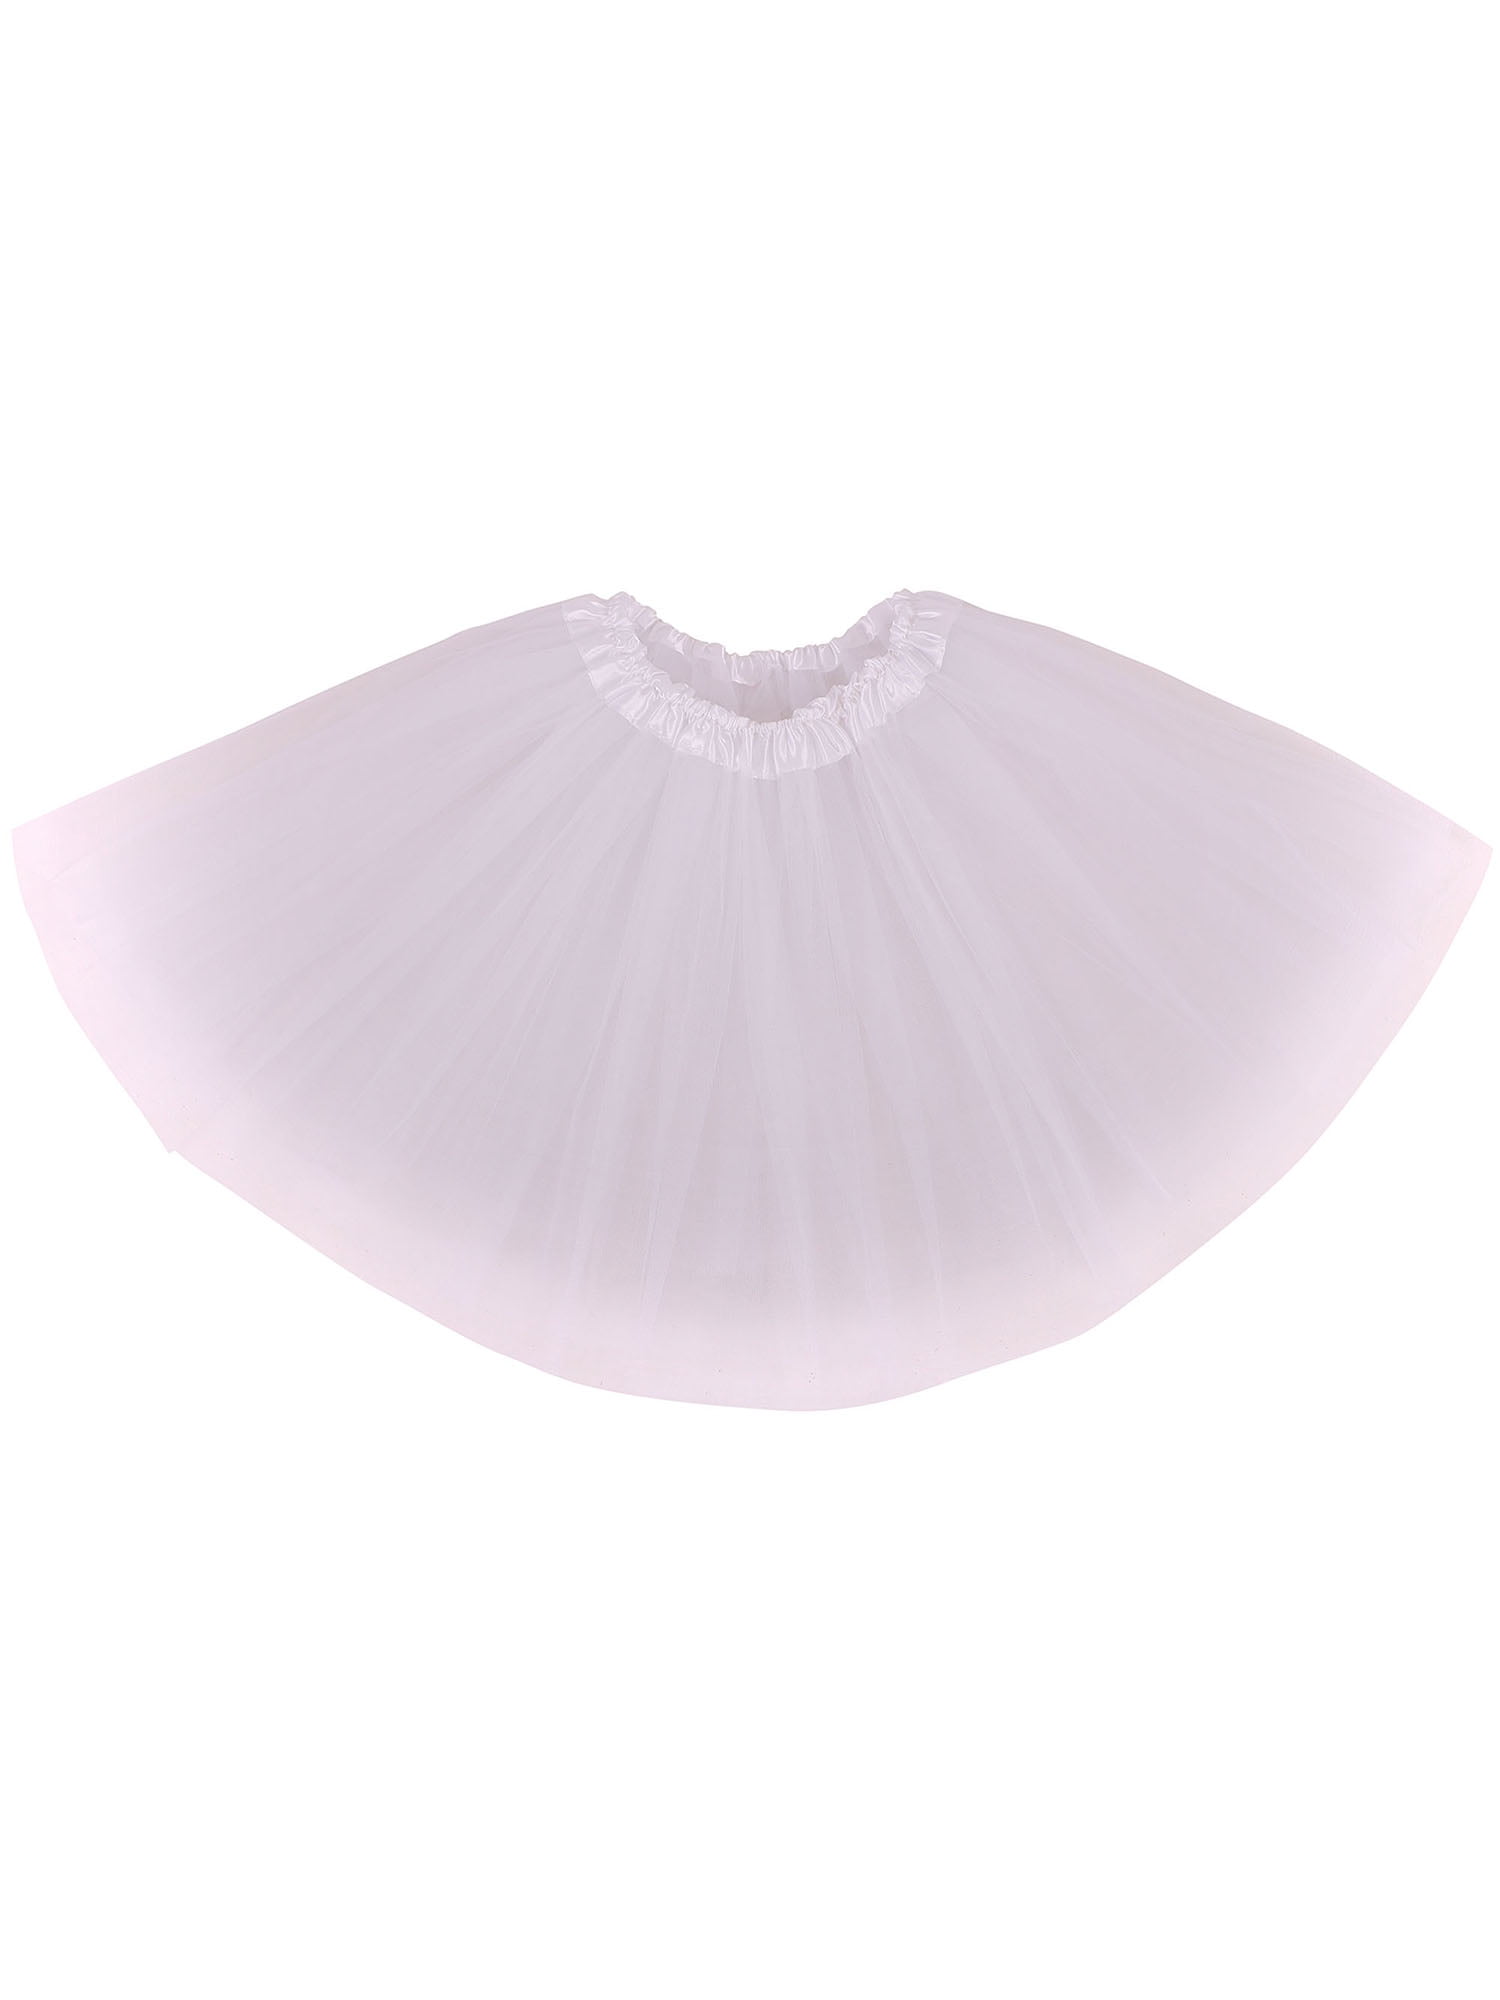 Womens 3 Layers Ballet Tutu Skirt White